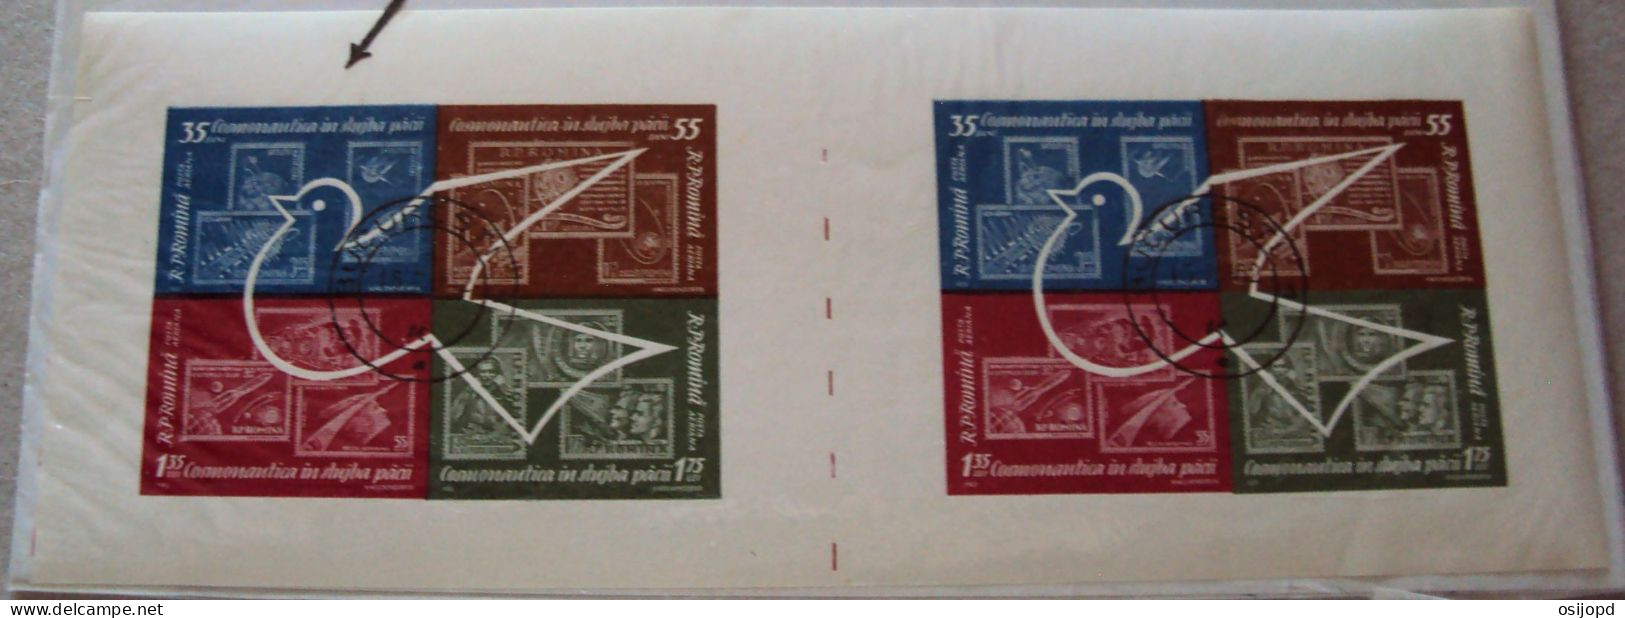 Rumänien, 1962, Bl 53, Kosmos, Blockpaar Ungetrennt,  Abart Buchstabe I Fehlt  In Artificial, Block Links, Gestempelt - Plaatfouten En Curiosa